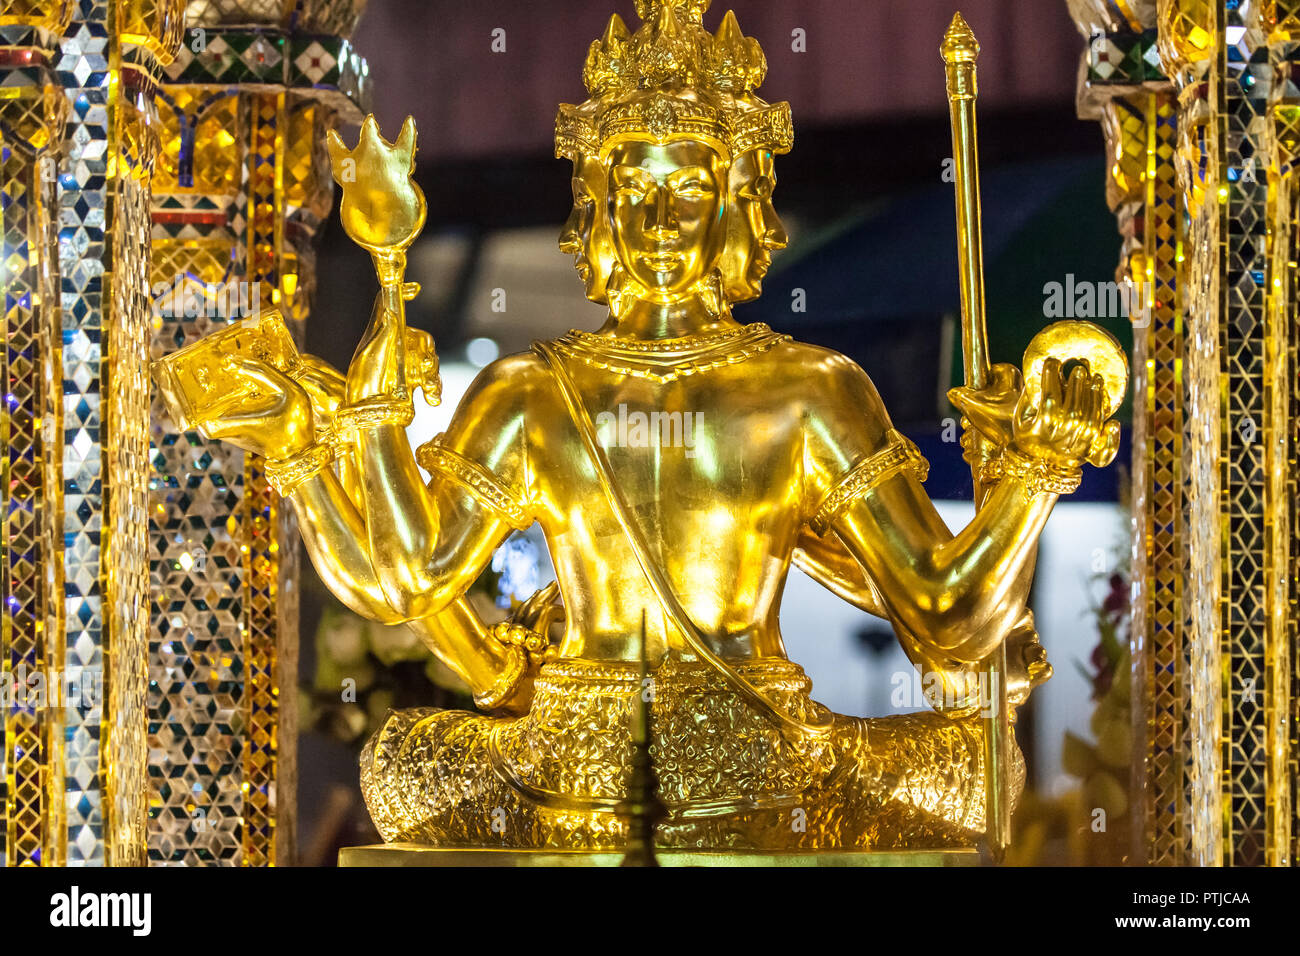 Phra Phrom statue at Erawan Shrine, Bangkok, Thailand. Stock Photo